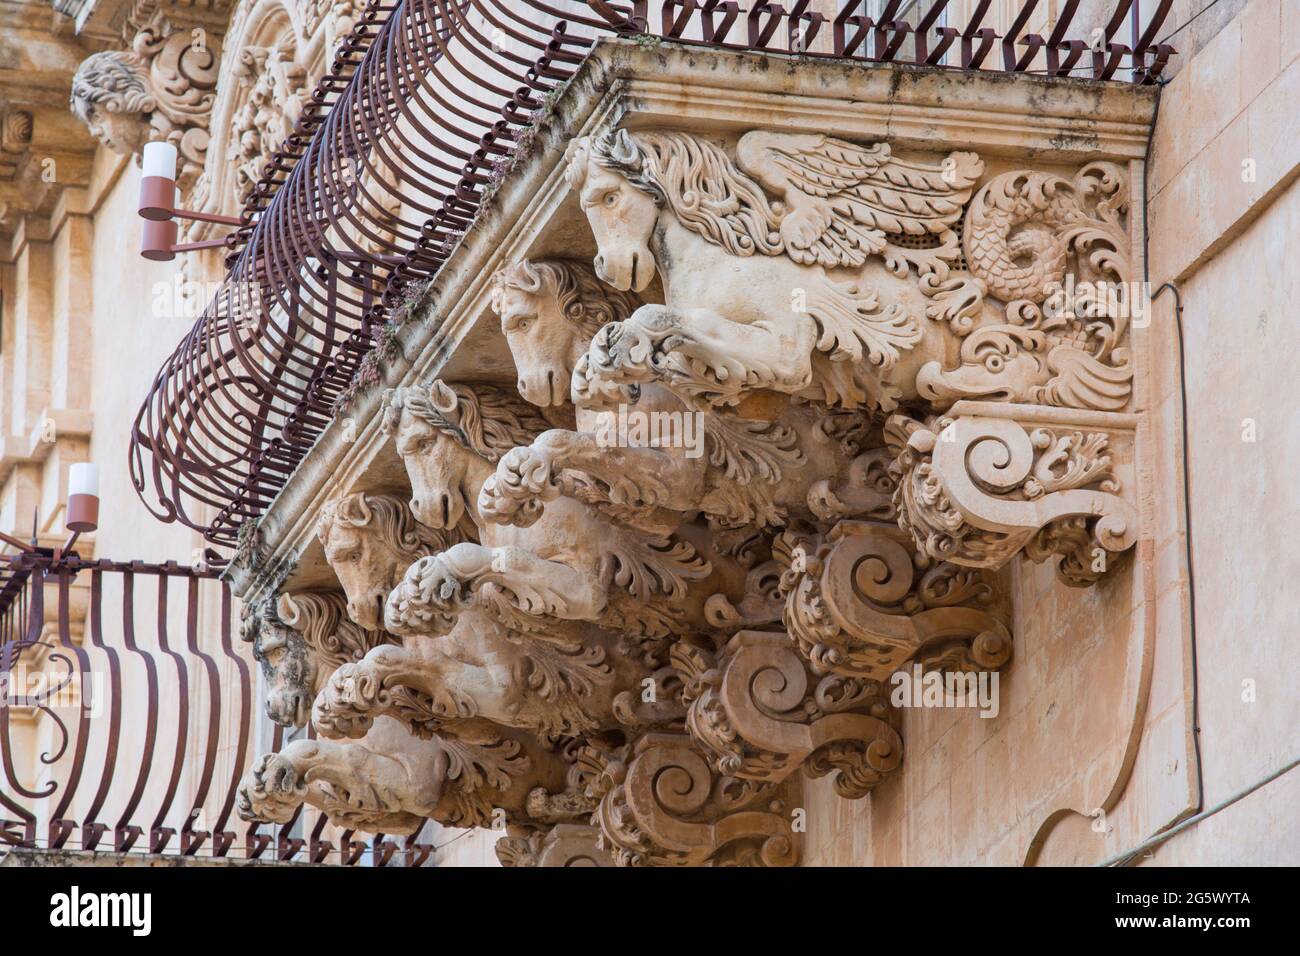 Noto, Syracuse, Sicile, Italie. Des figures de pierre finement sculptées soutenant un balcon ornemental sur la façade baroque du Palazzo Nicolaci di Villadorata. Banque D'Images